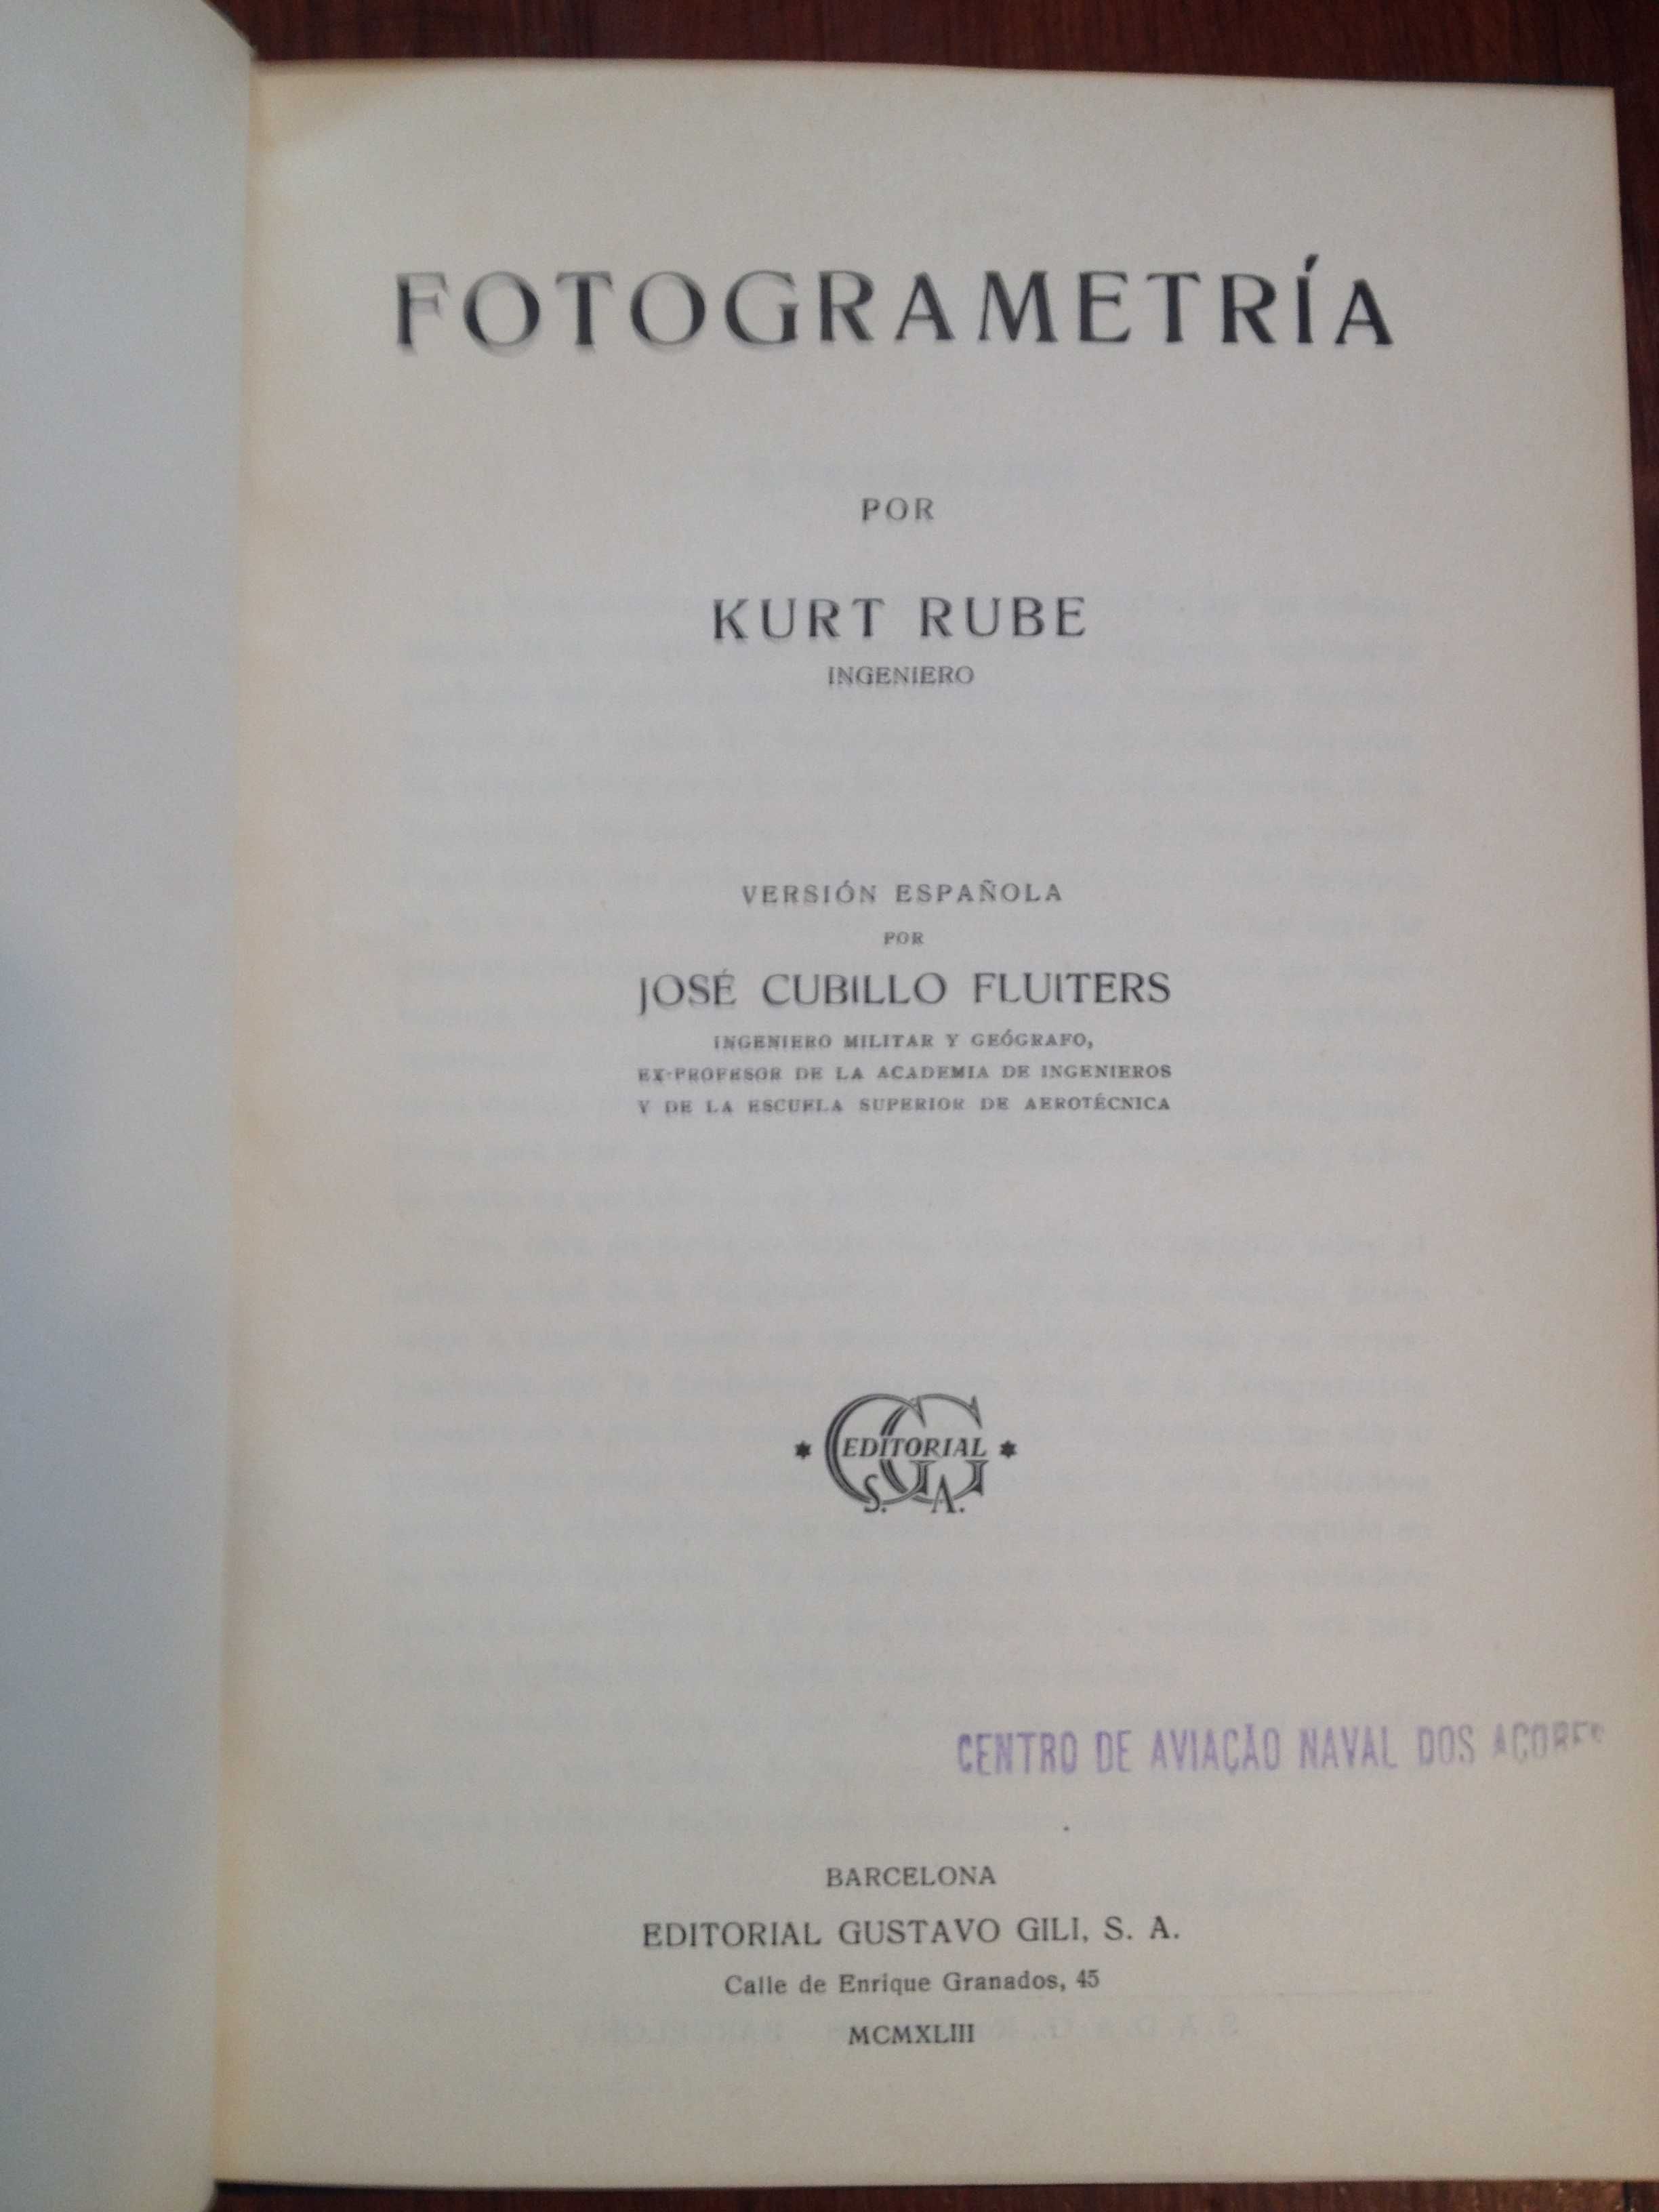 Kurt Rube - Fotogrametría